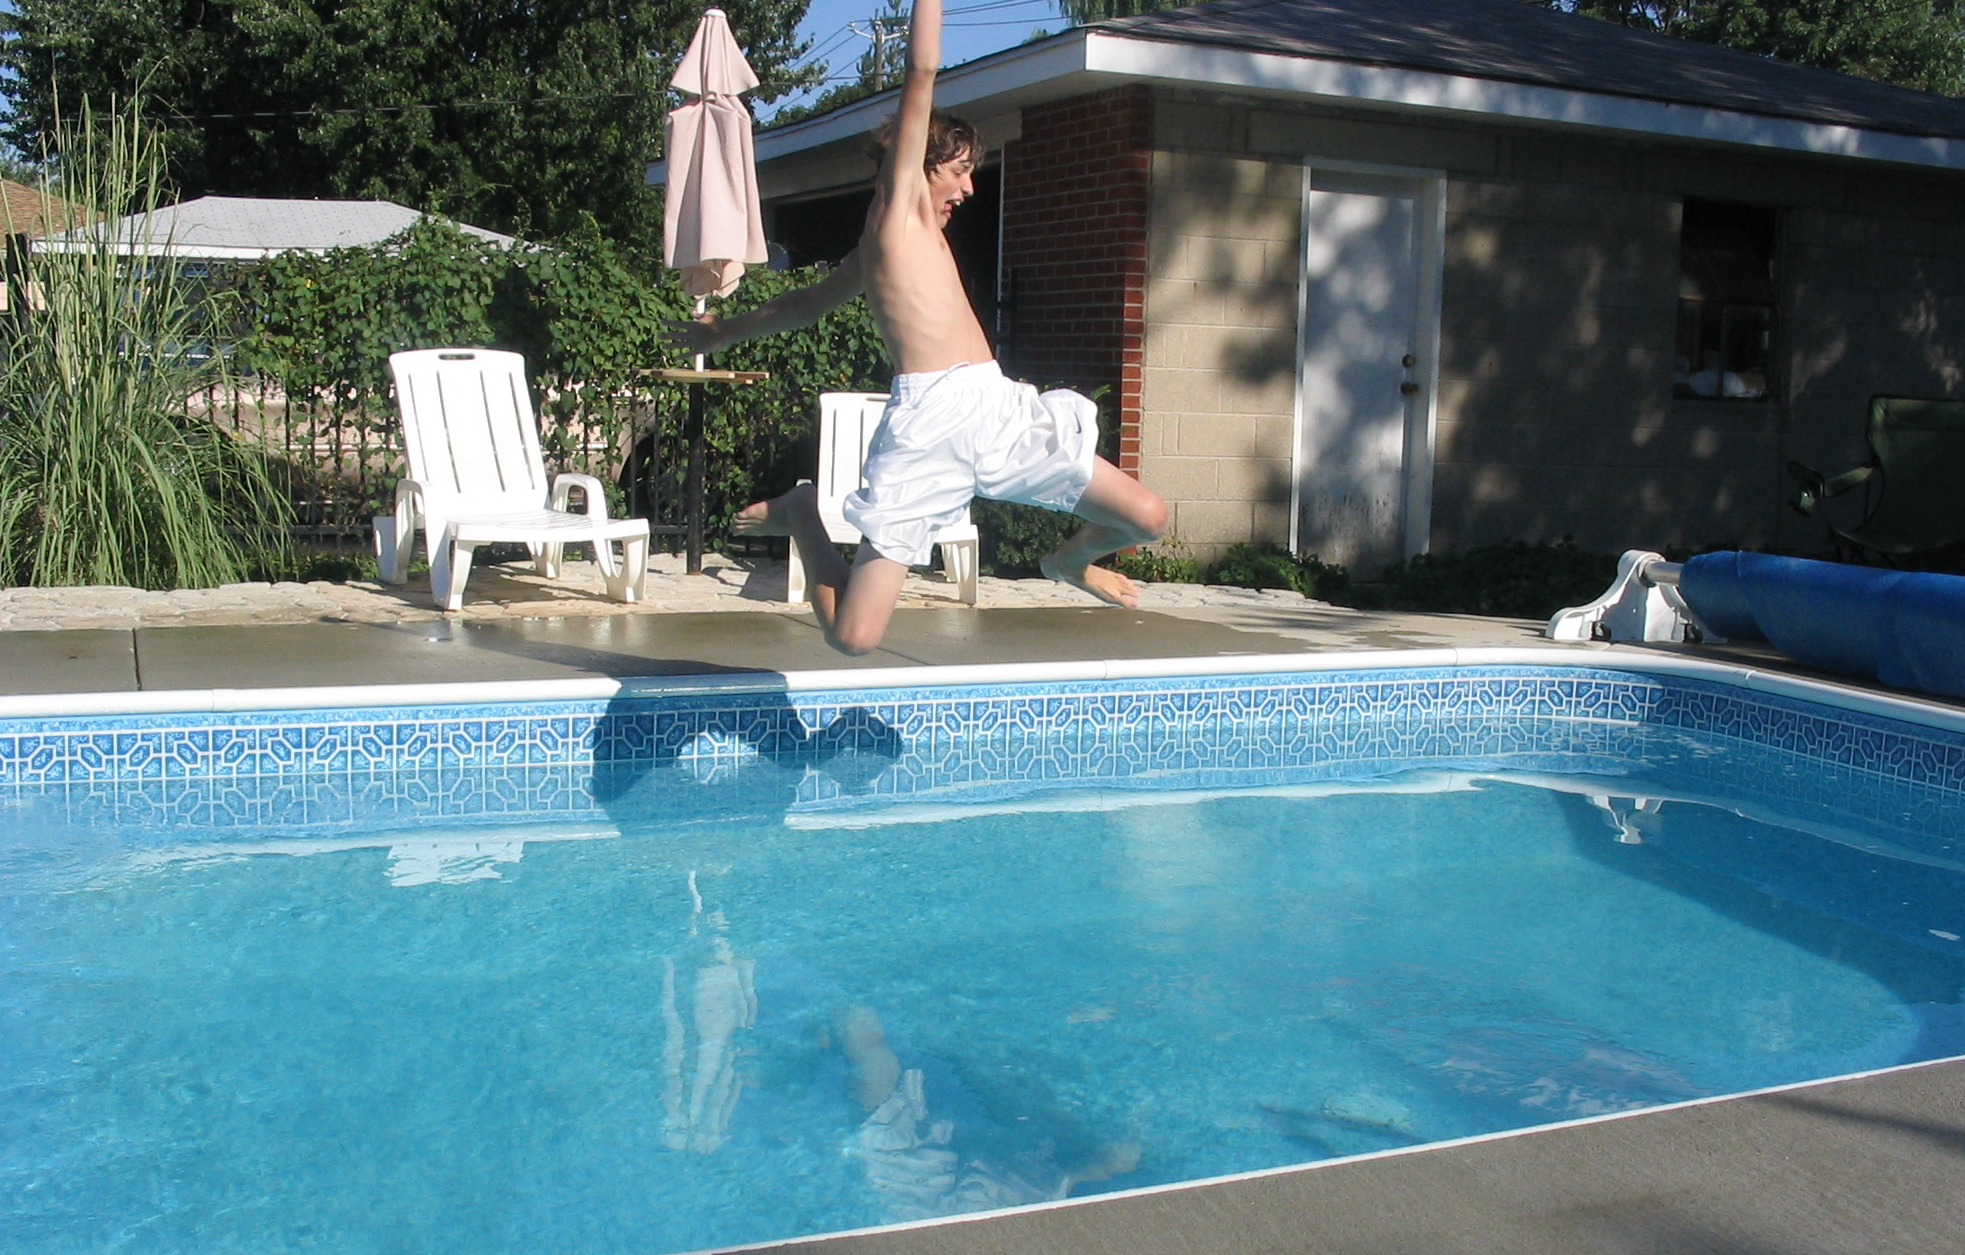 Pool Jumper